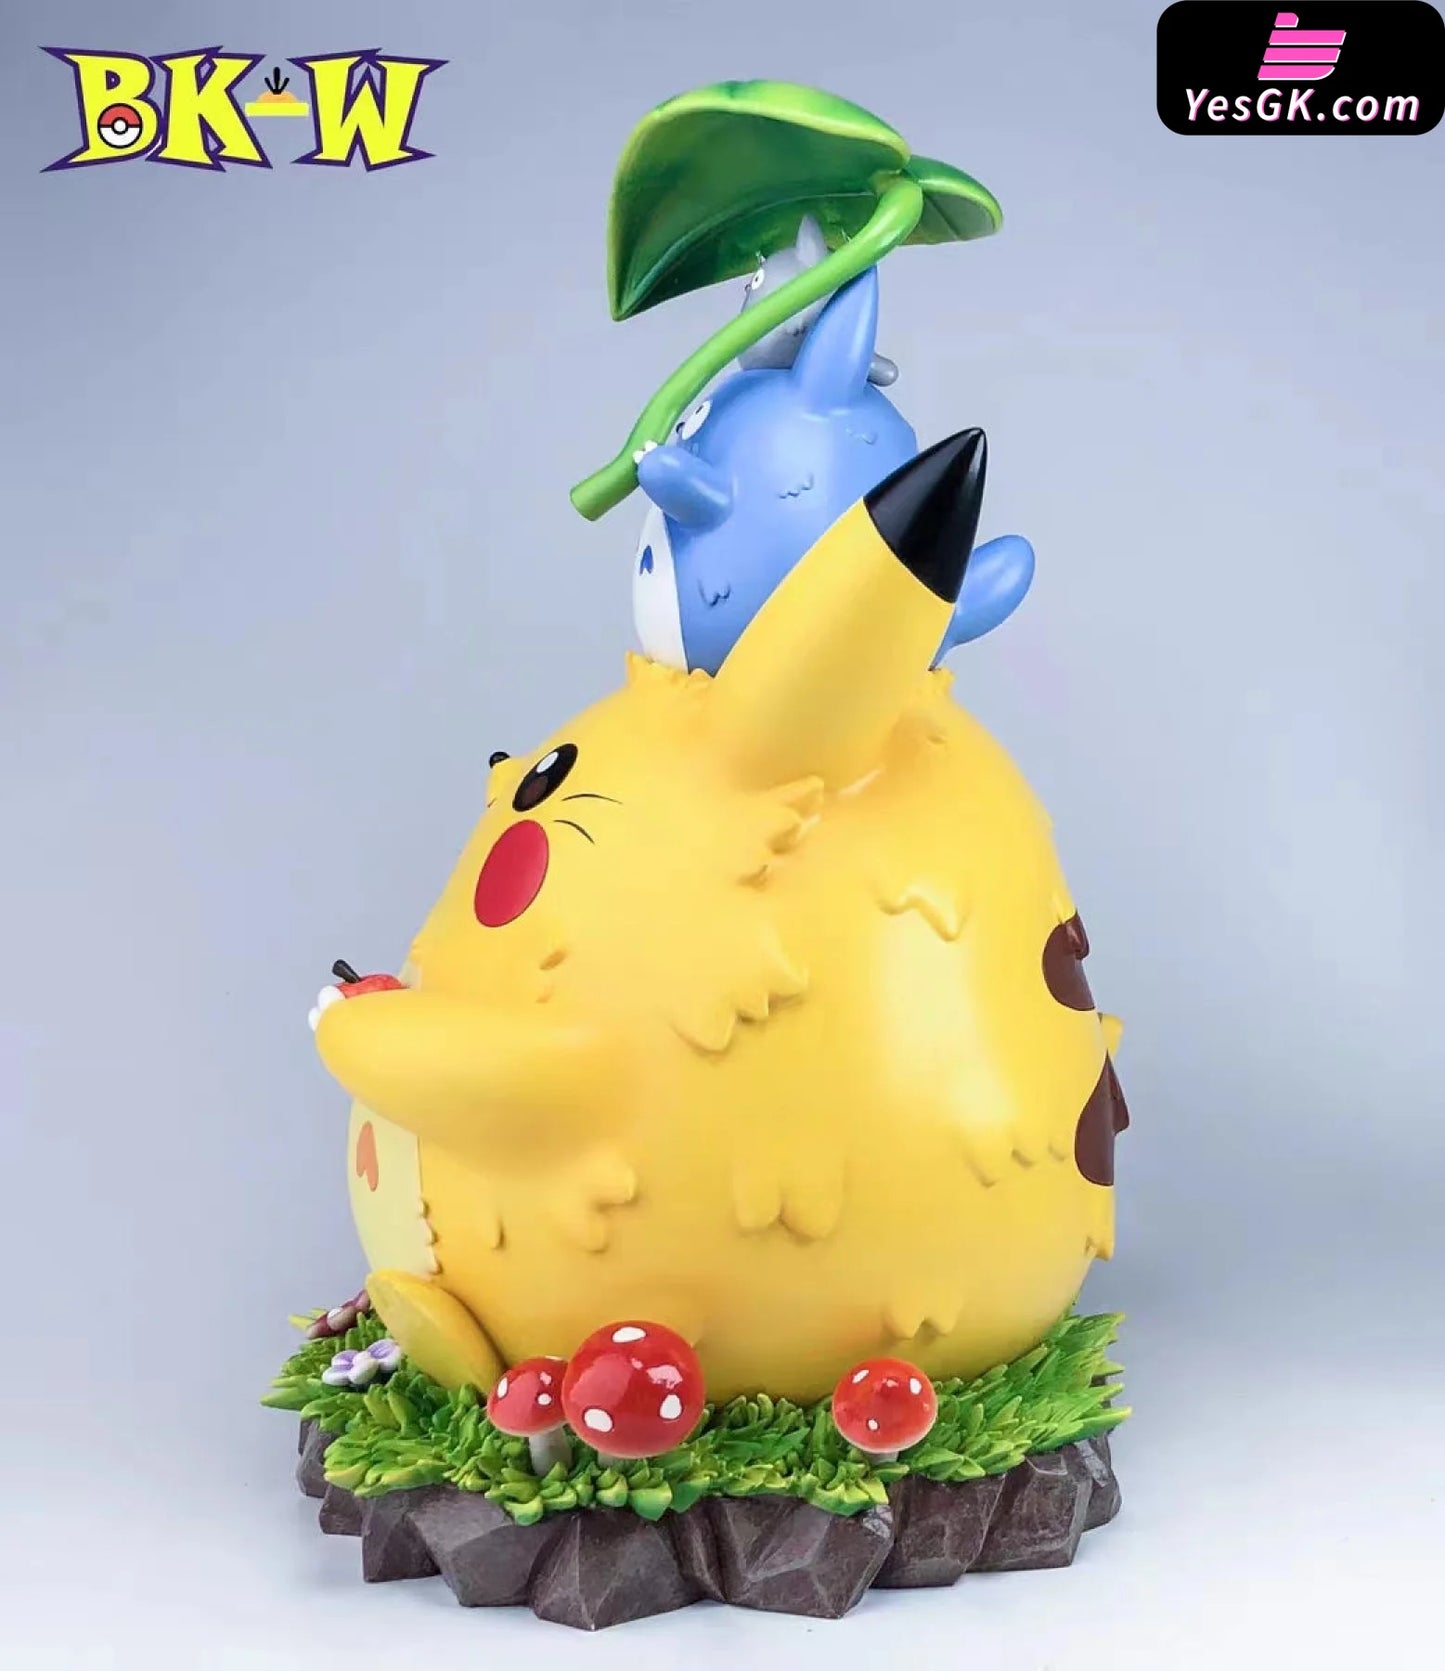 Pokémon My Neighbor Totoro Pikachu Statue - Bkw Studio [Pre-Order]